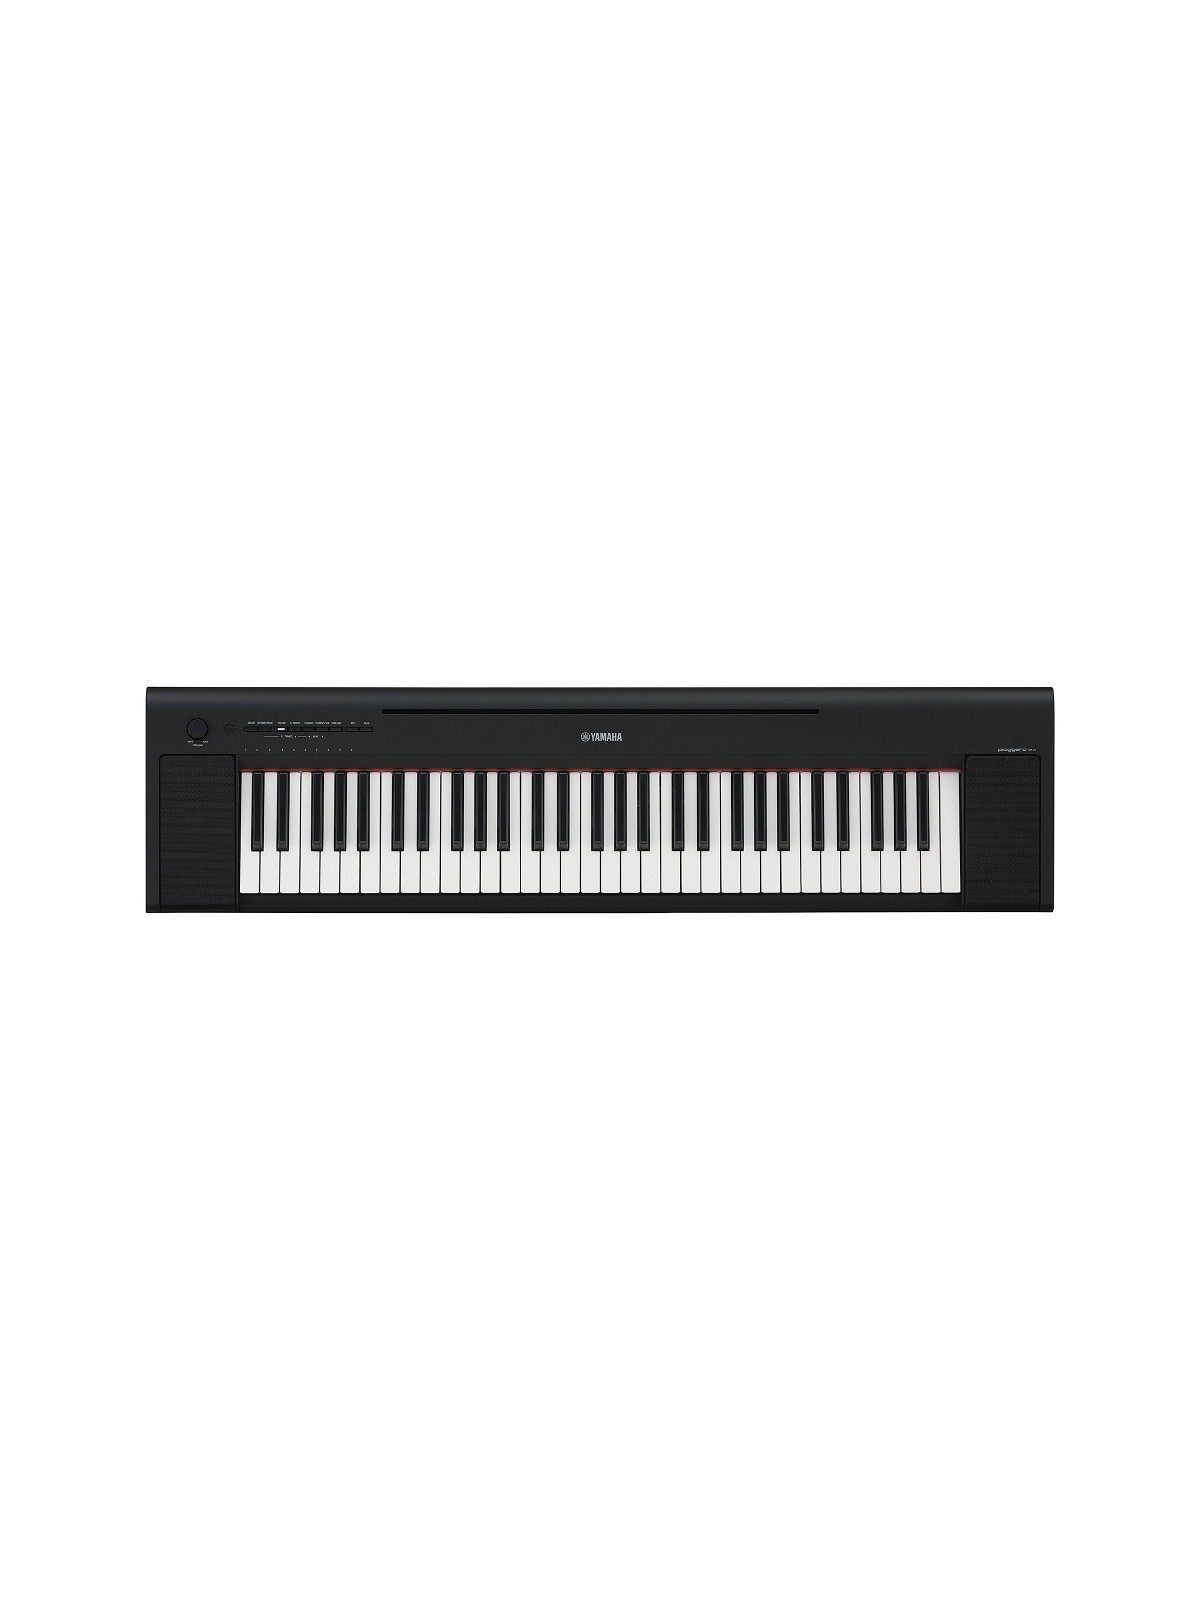 Piano portable Yamaha NP-15B noir d'initiation, simple et performant
Piano portable 61 touches